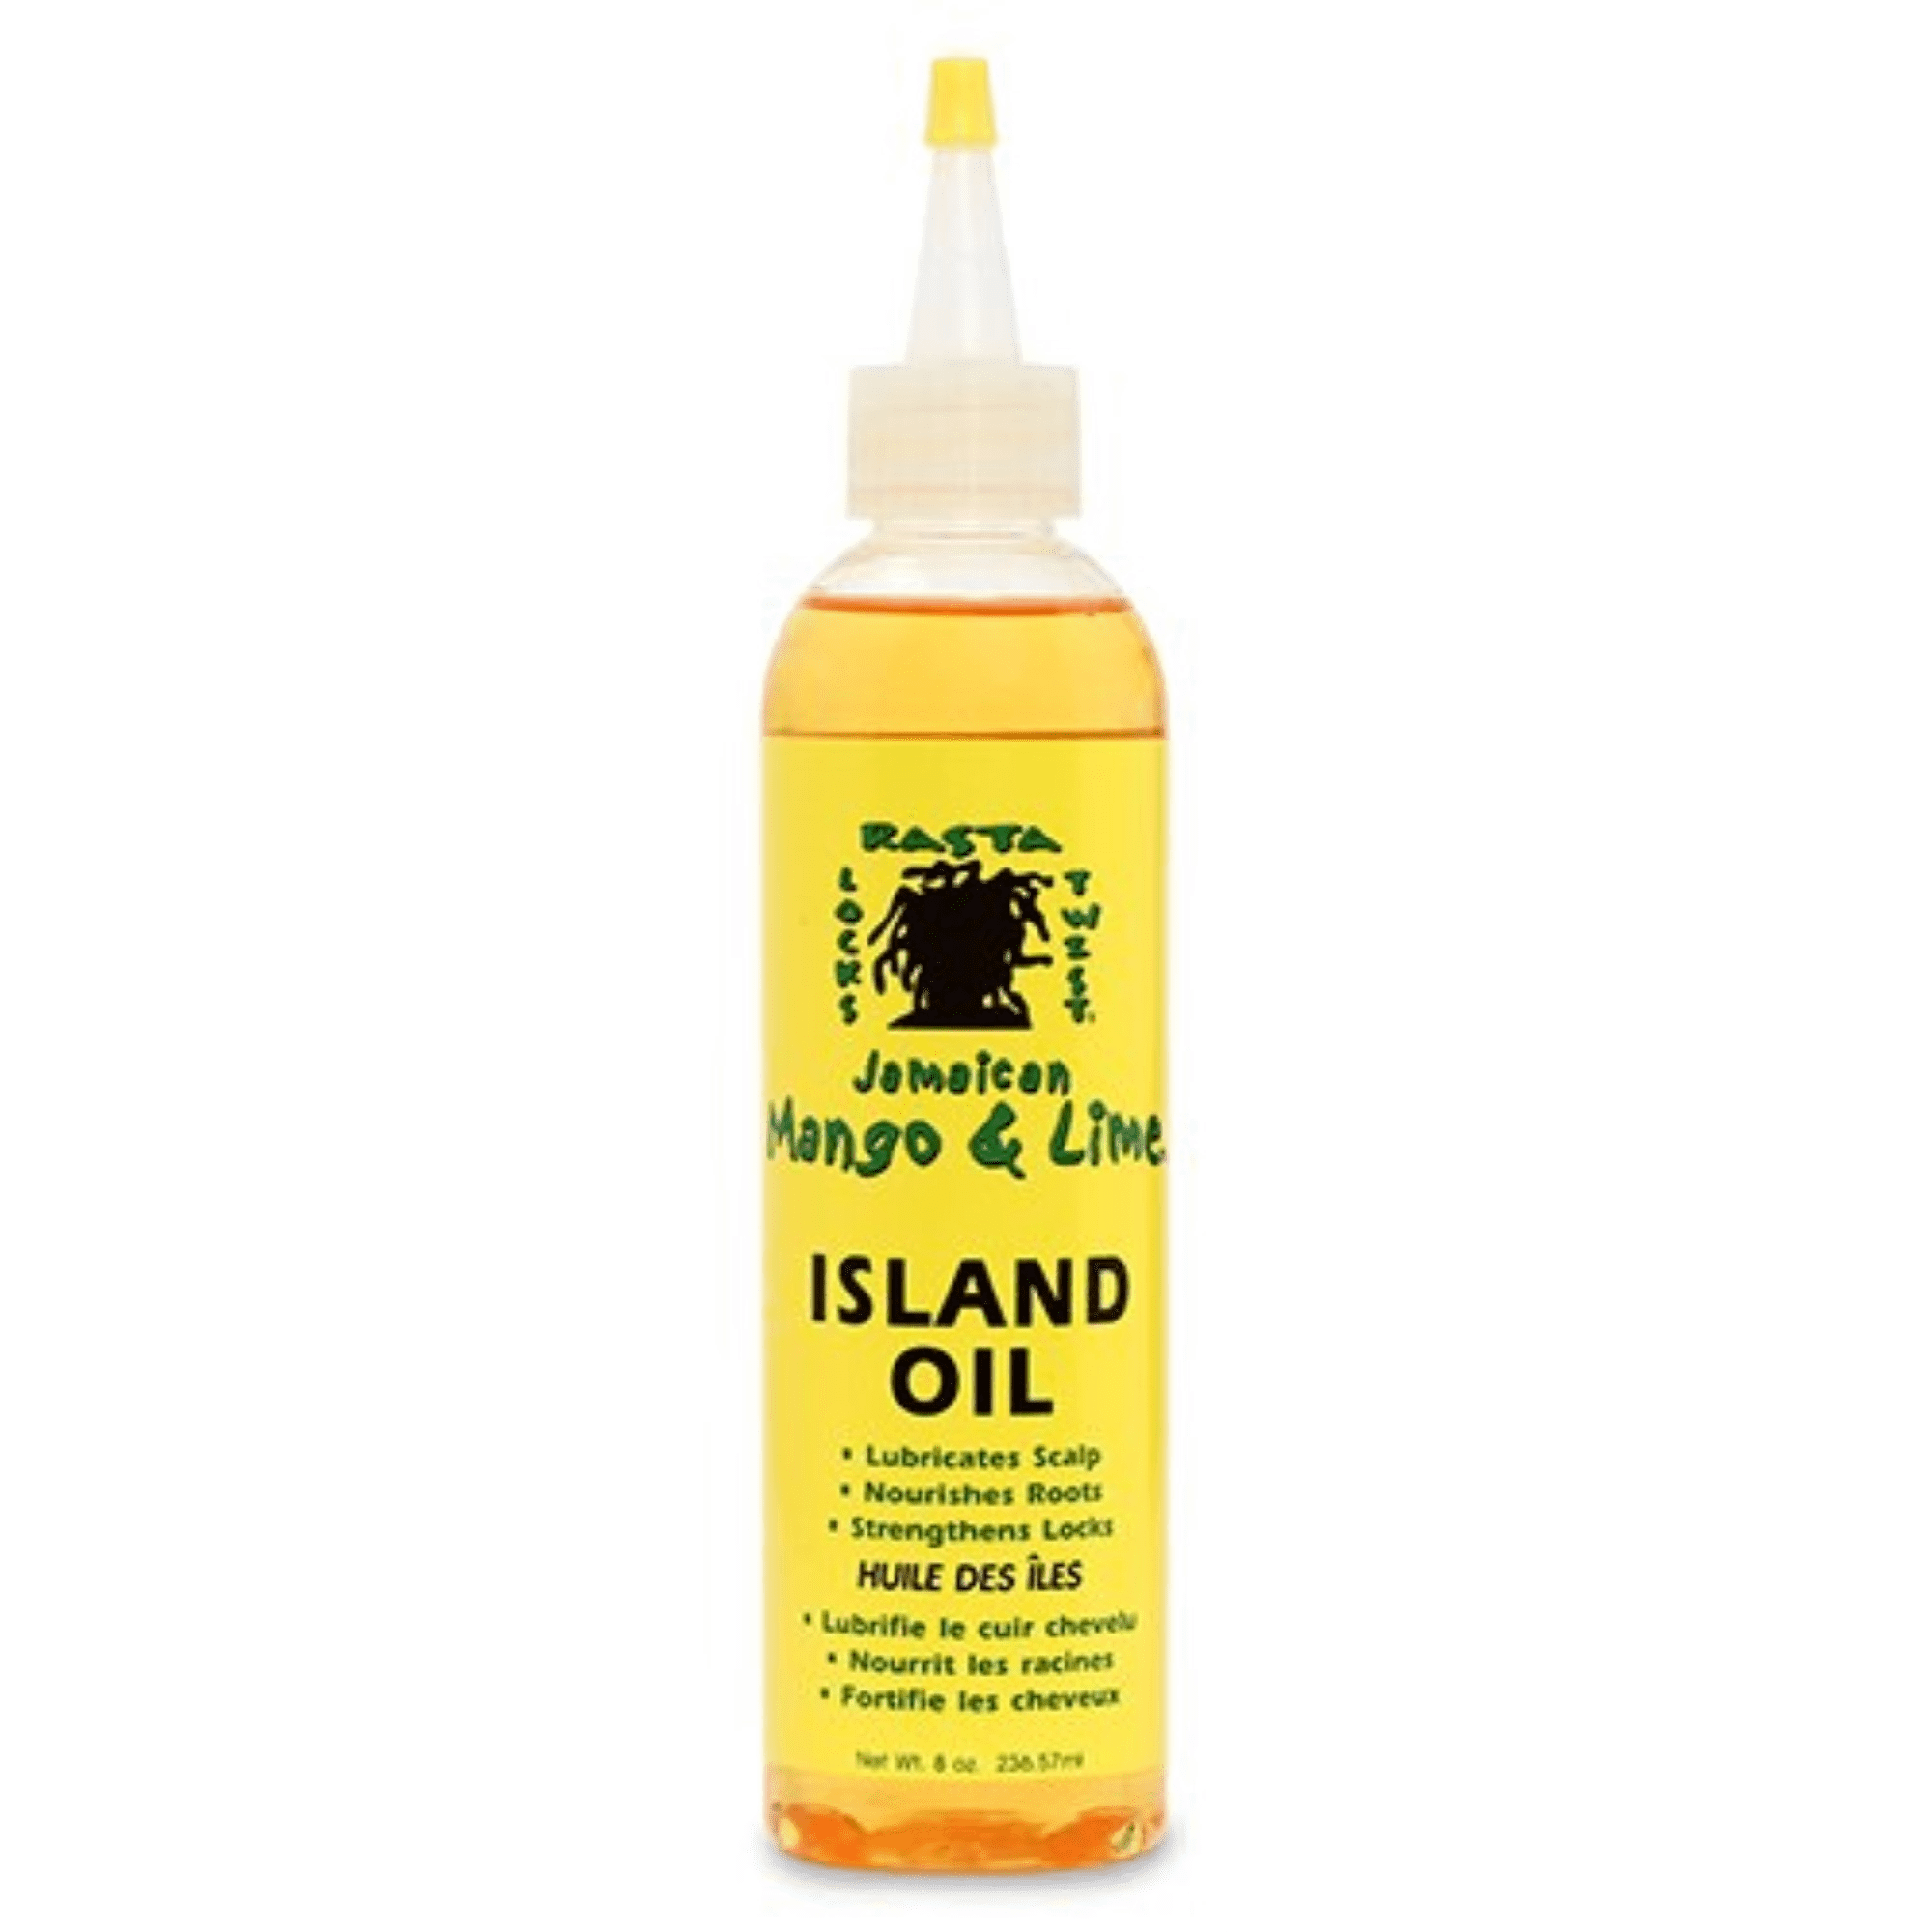 Jamaican Mango & Lime- Island Oil 8oz